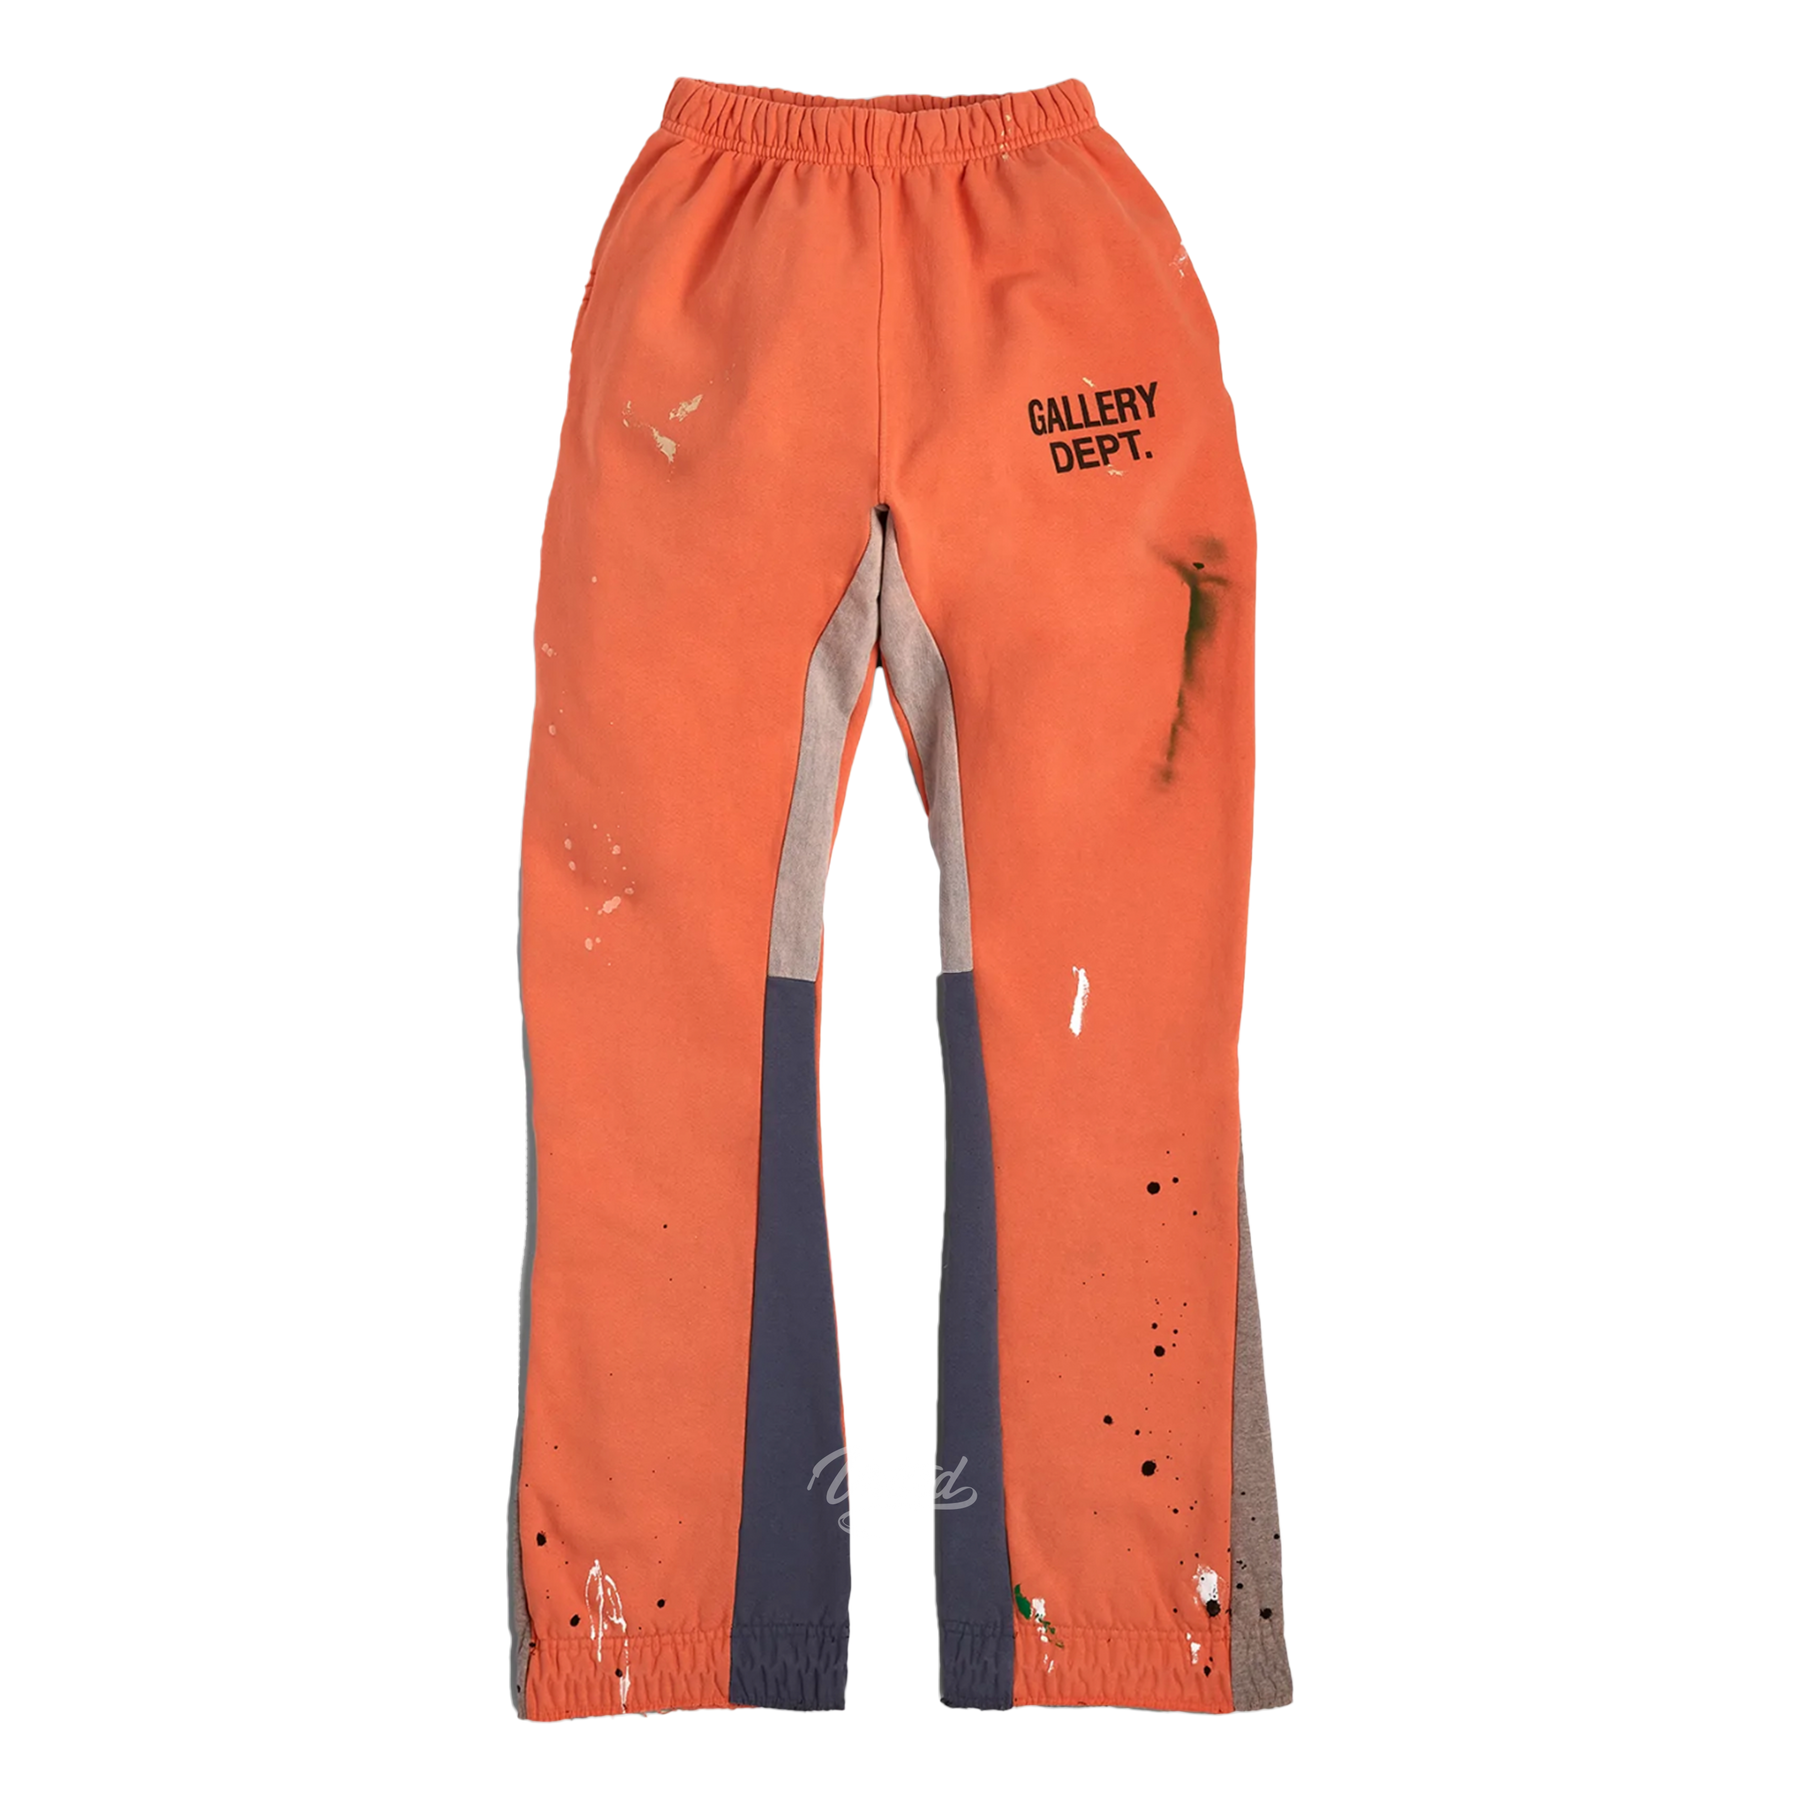 Gallery Dept. GD Logo Flare Sweatpants "Orange"